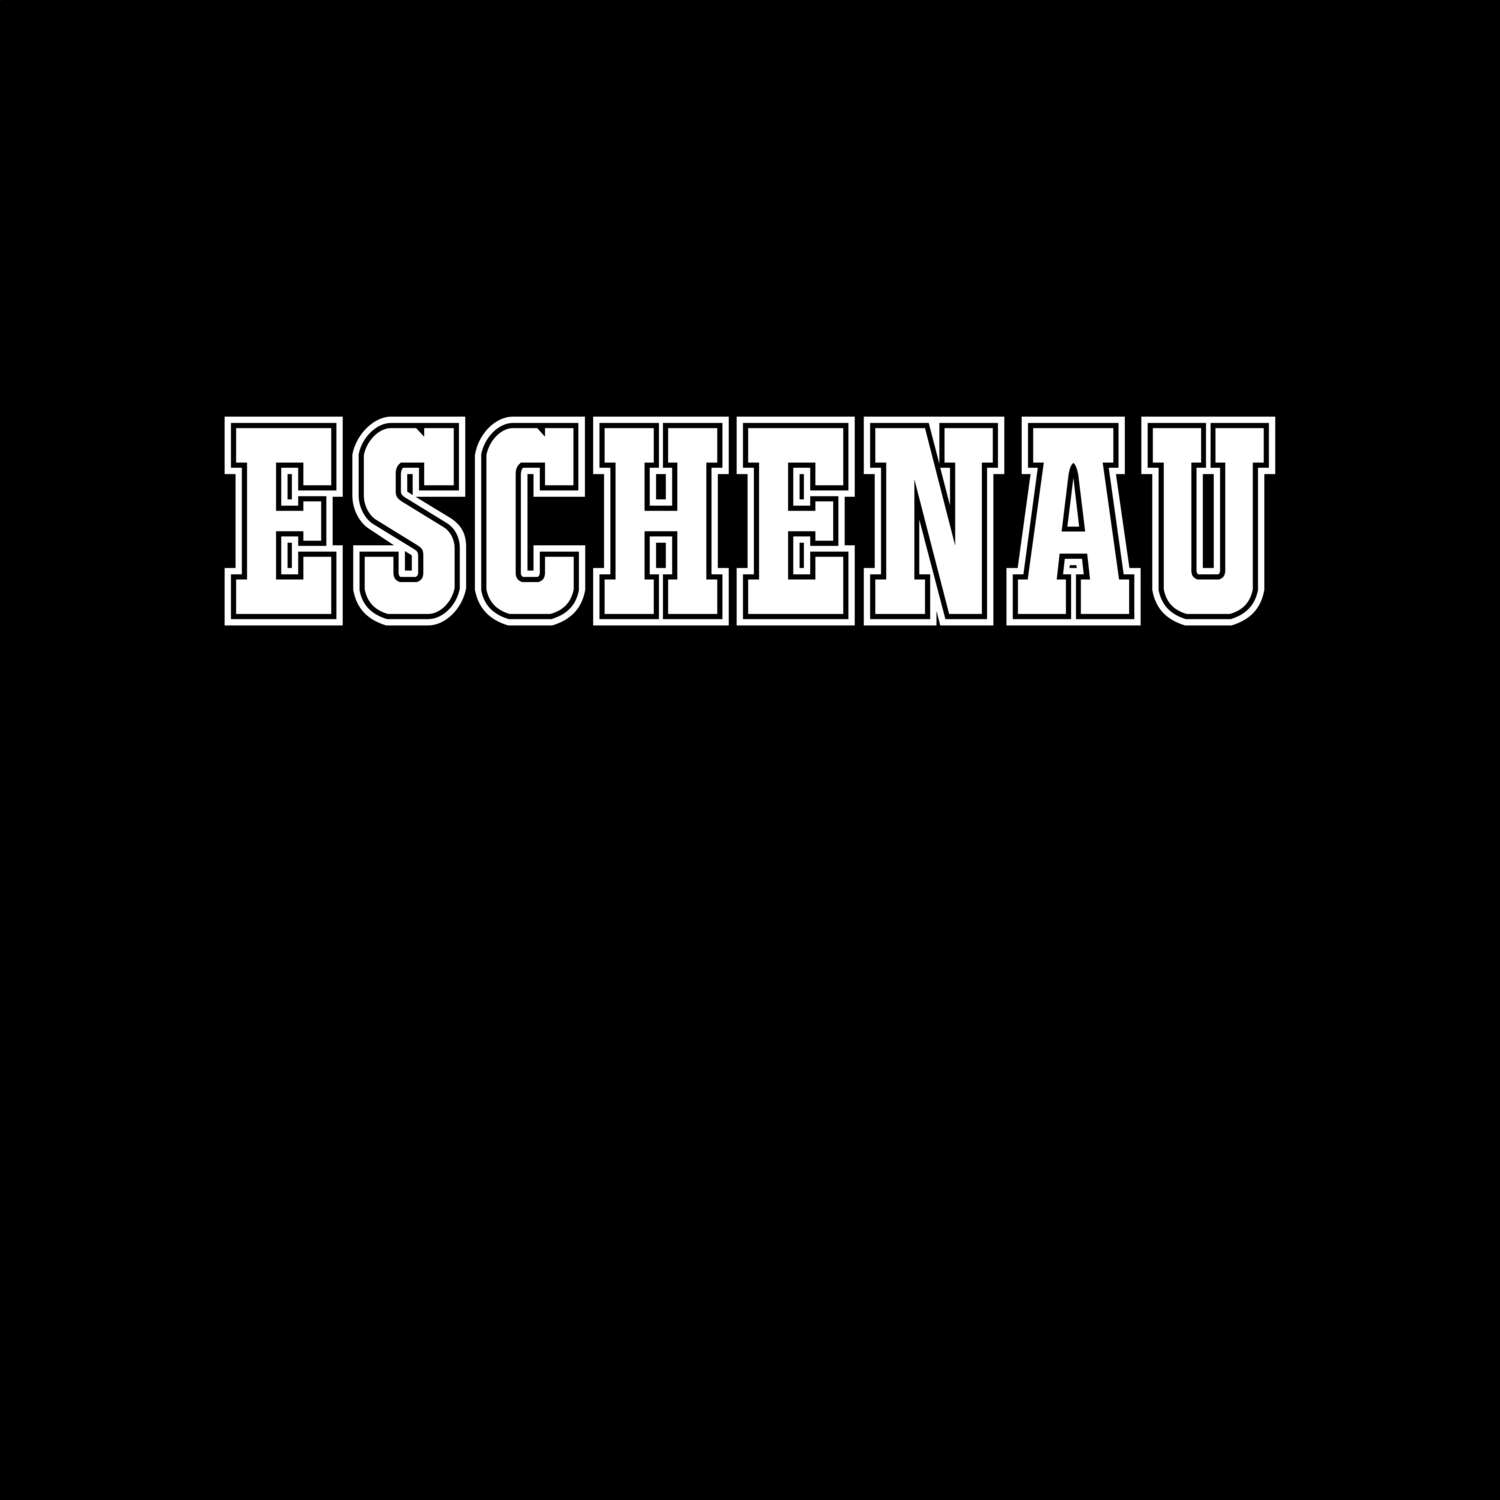 Eschenau T-Shirt »Classic«